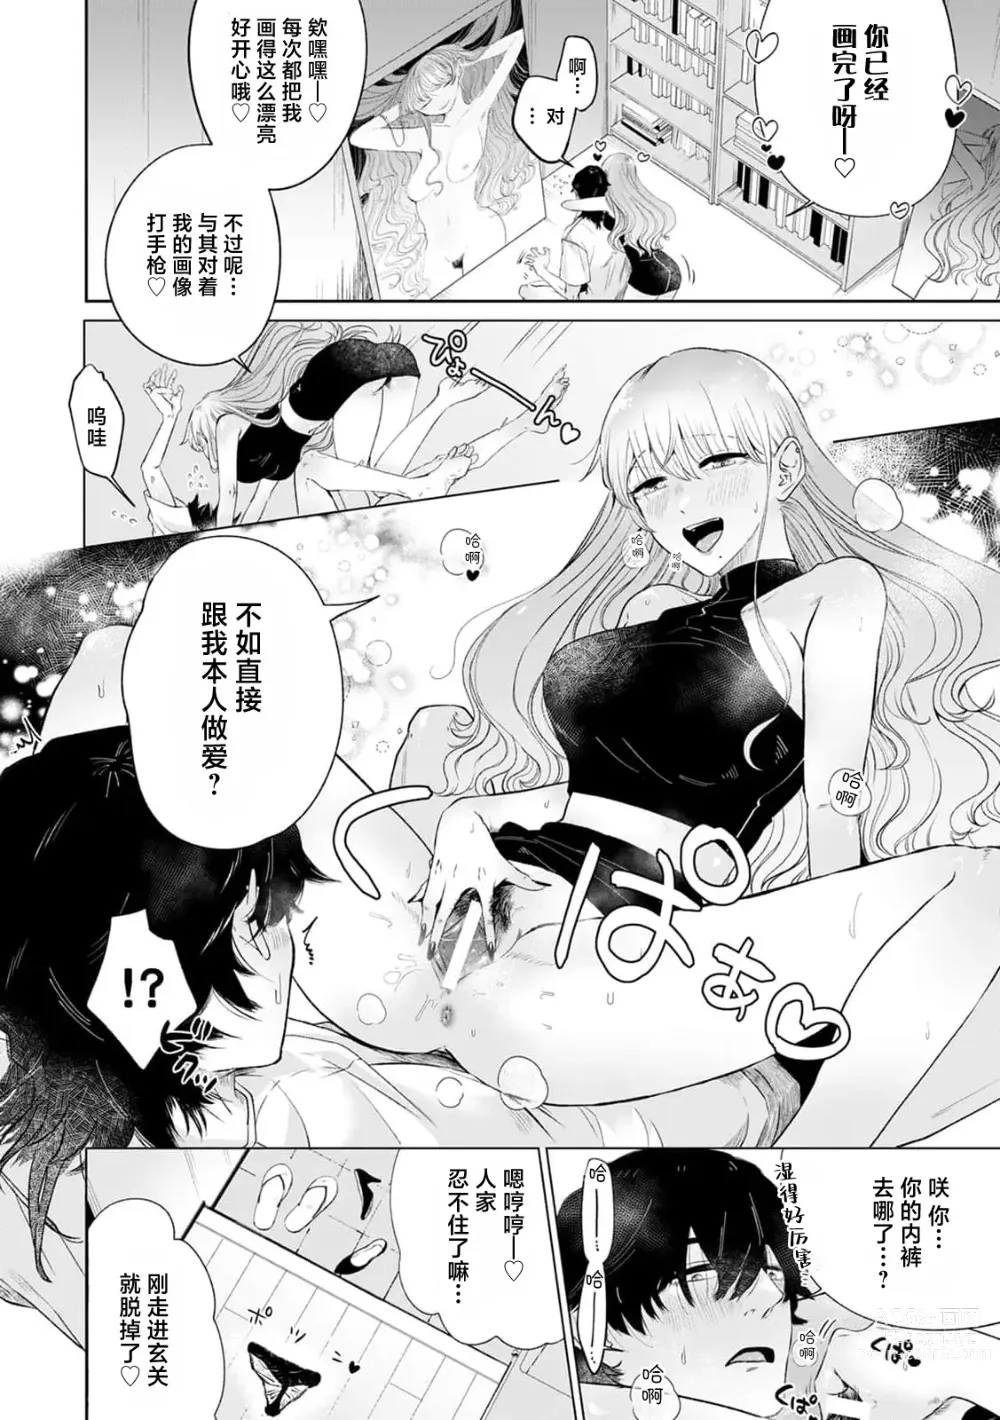 Page 3 of manga 你我二人、深陷发情之沼。